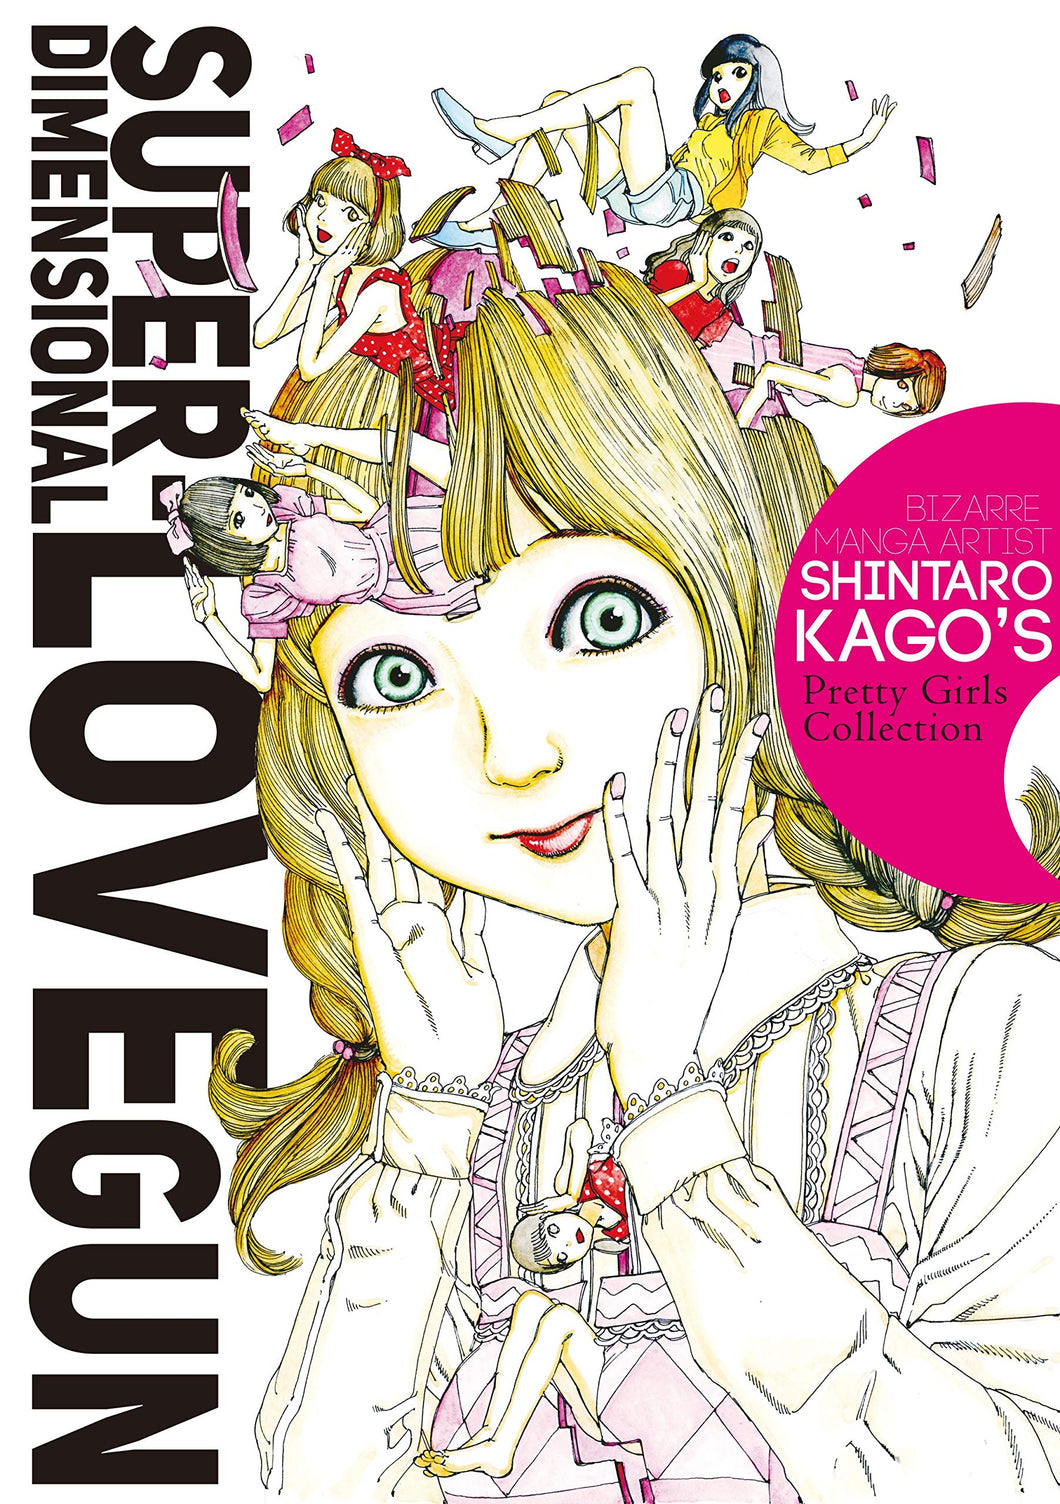 Super-Dimensional Love Gun by Shintaro Kago